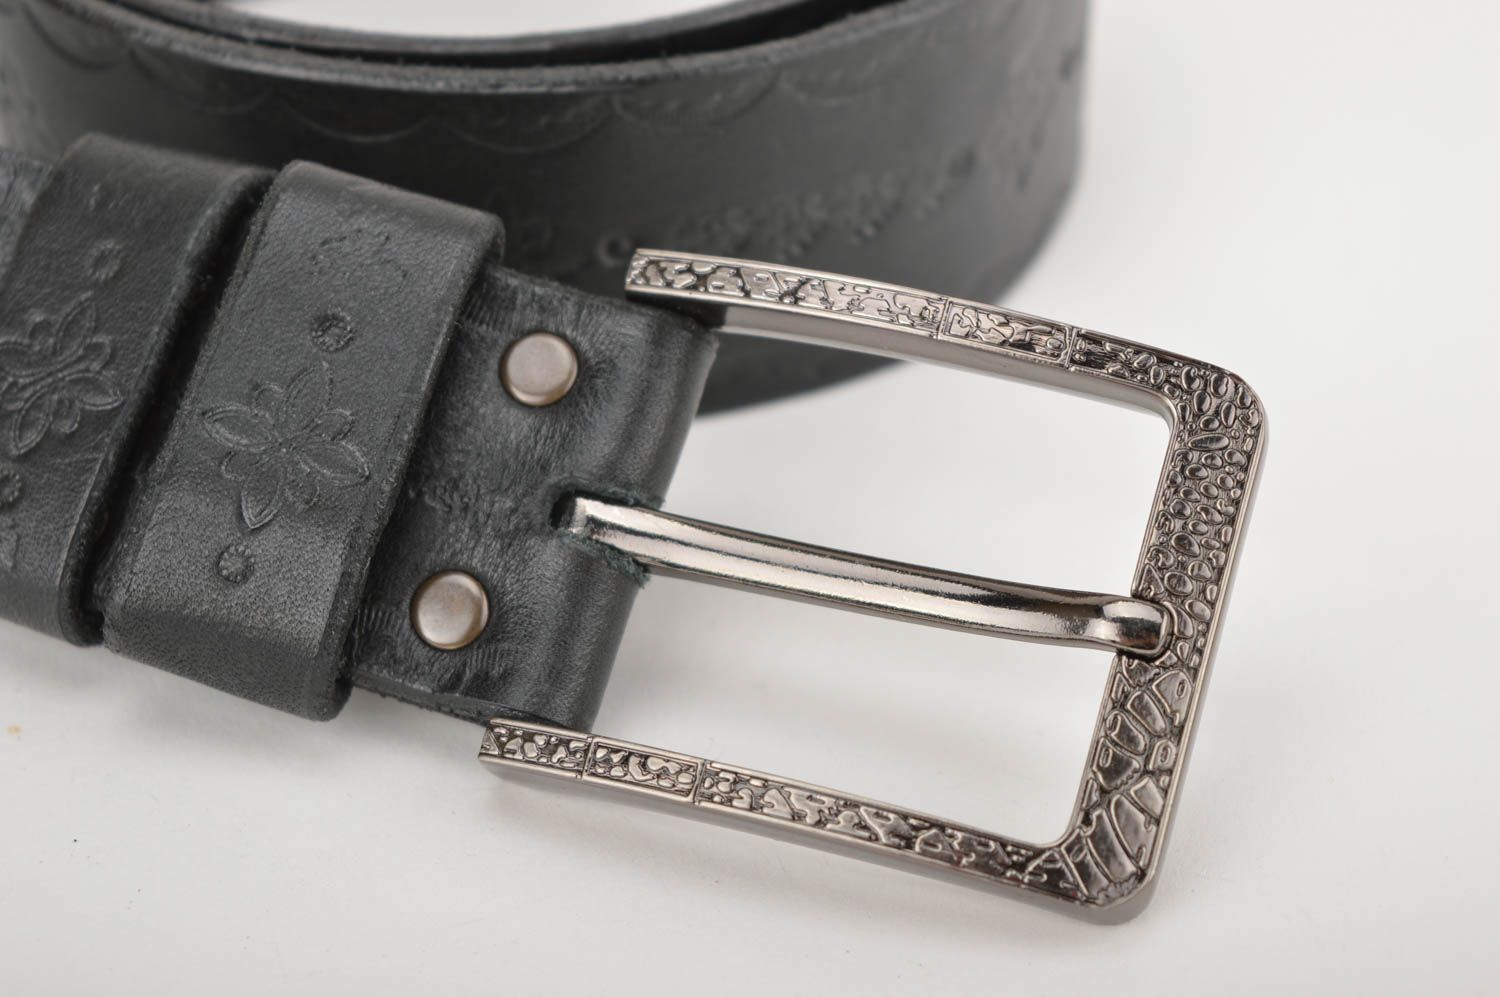 Stylish handmade leather belt stylish belts for men gentlemen only gift ideas photo 2